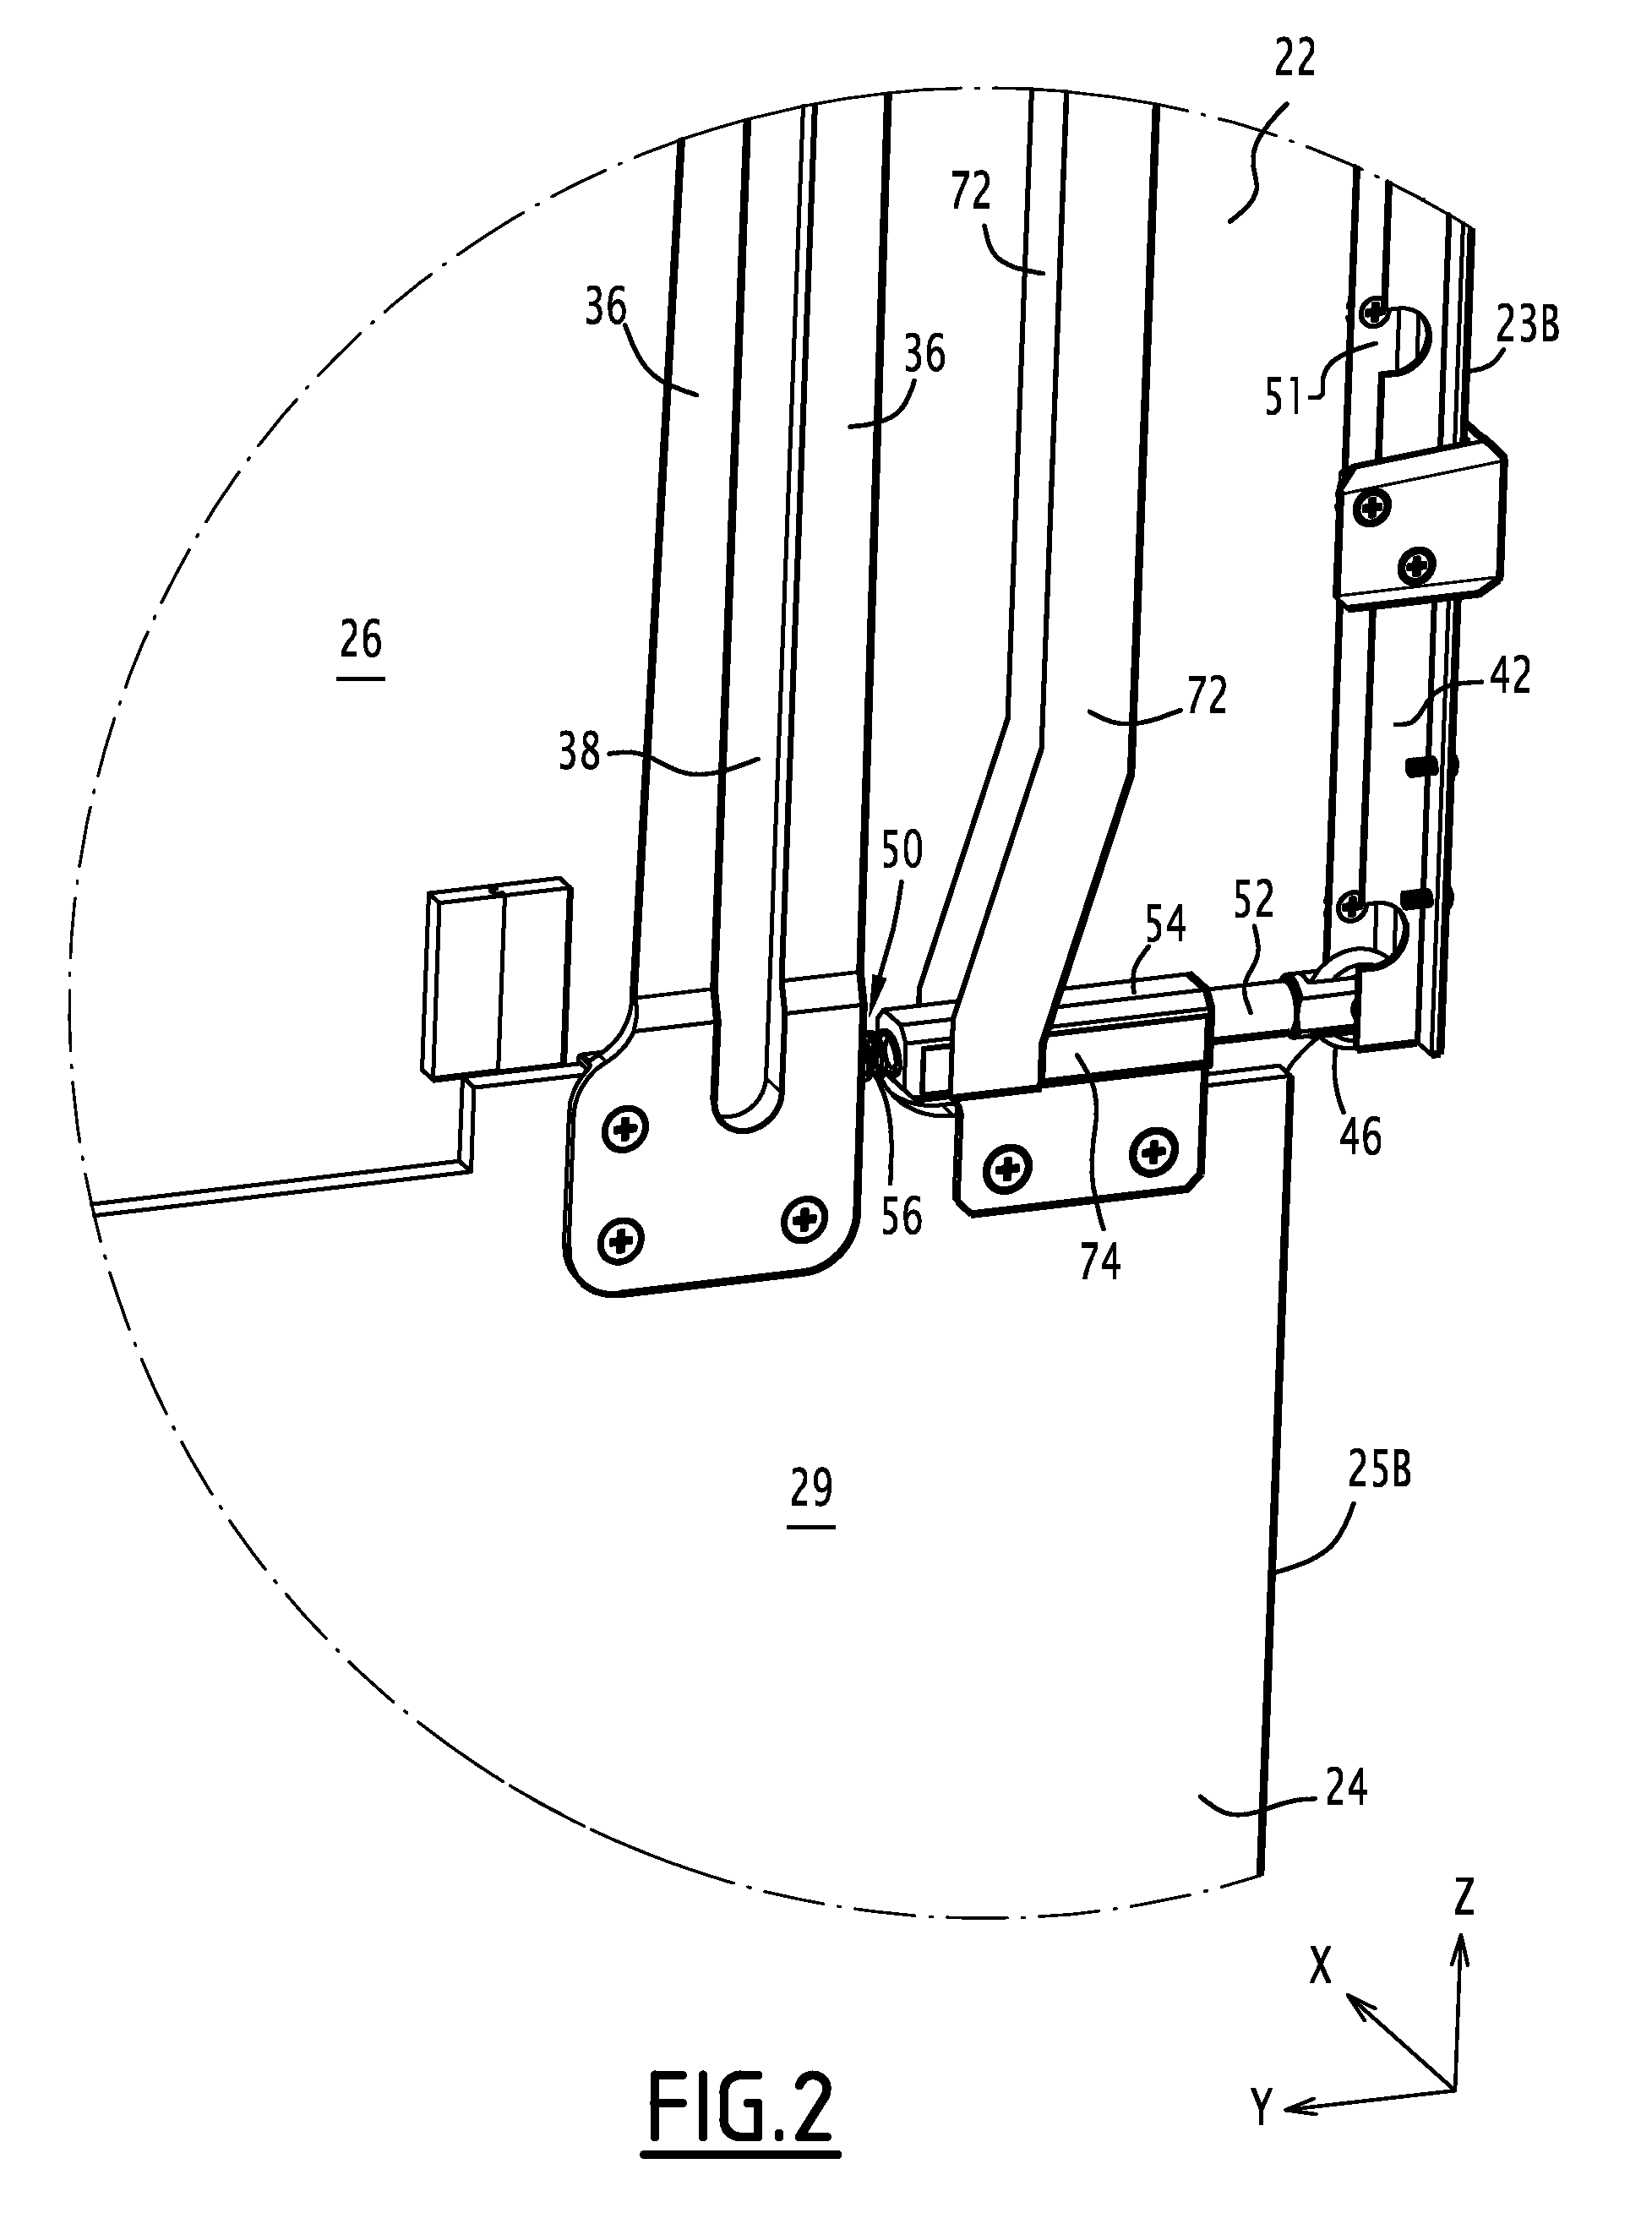 Separating element for a platform cabin comprising a push rod mechanism for moving a leaf